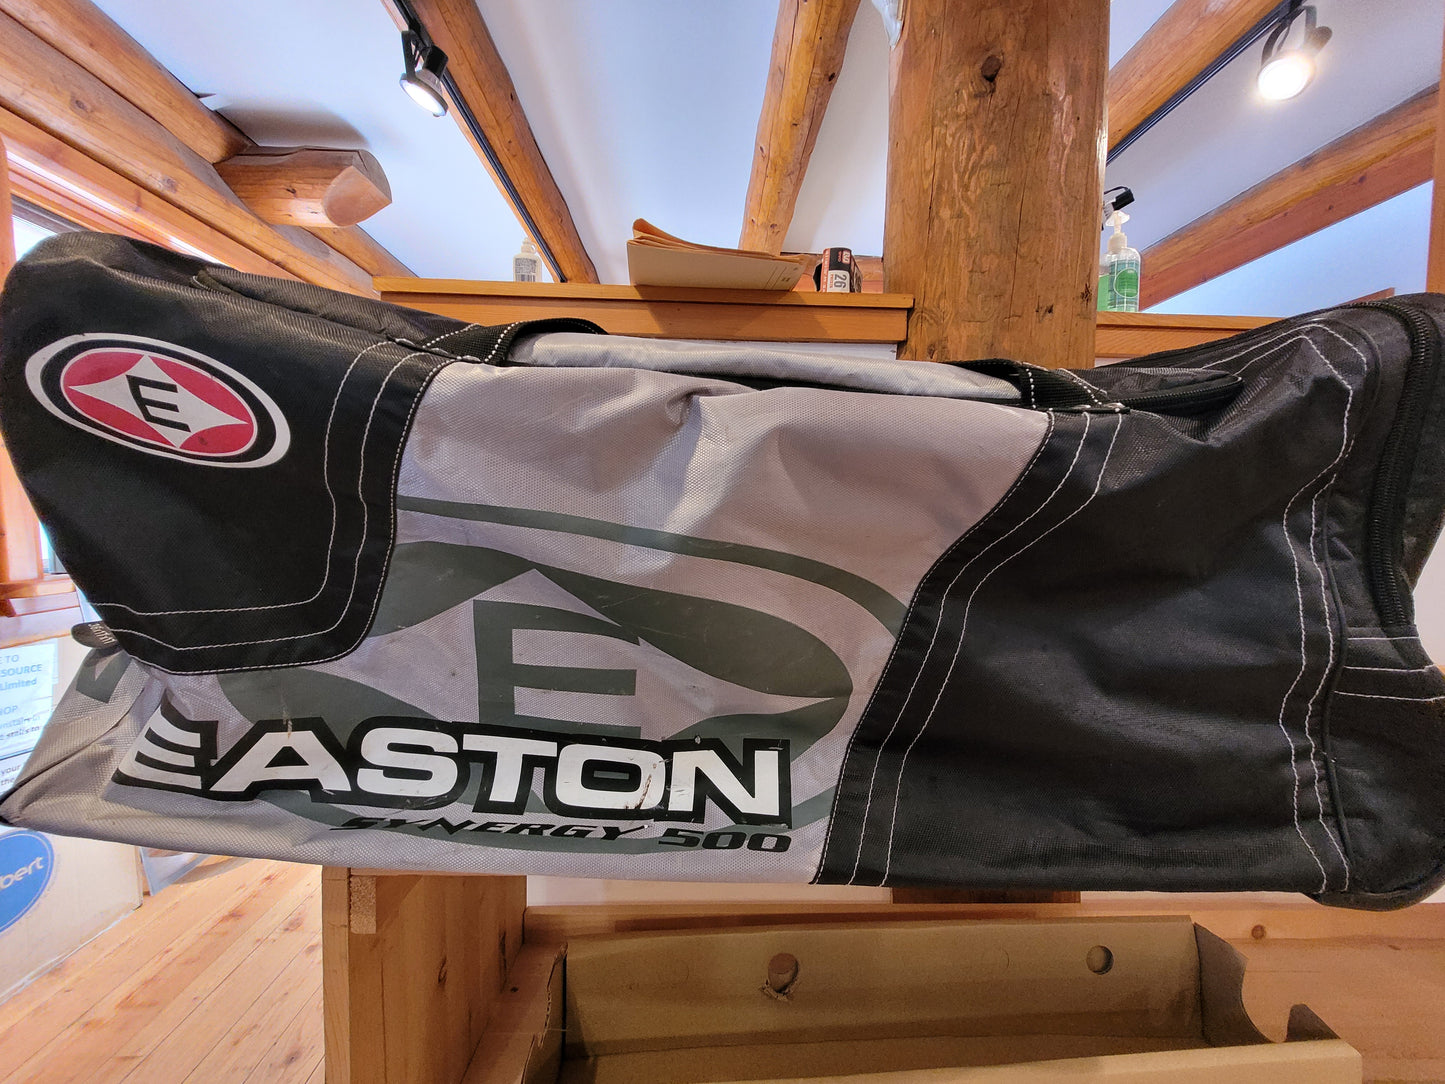 Used - Easton Synergy Senior Hockey Bag